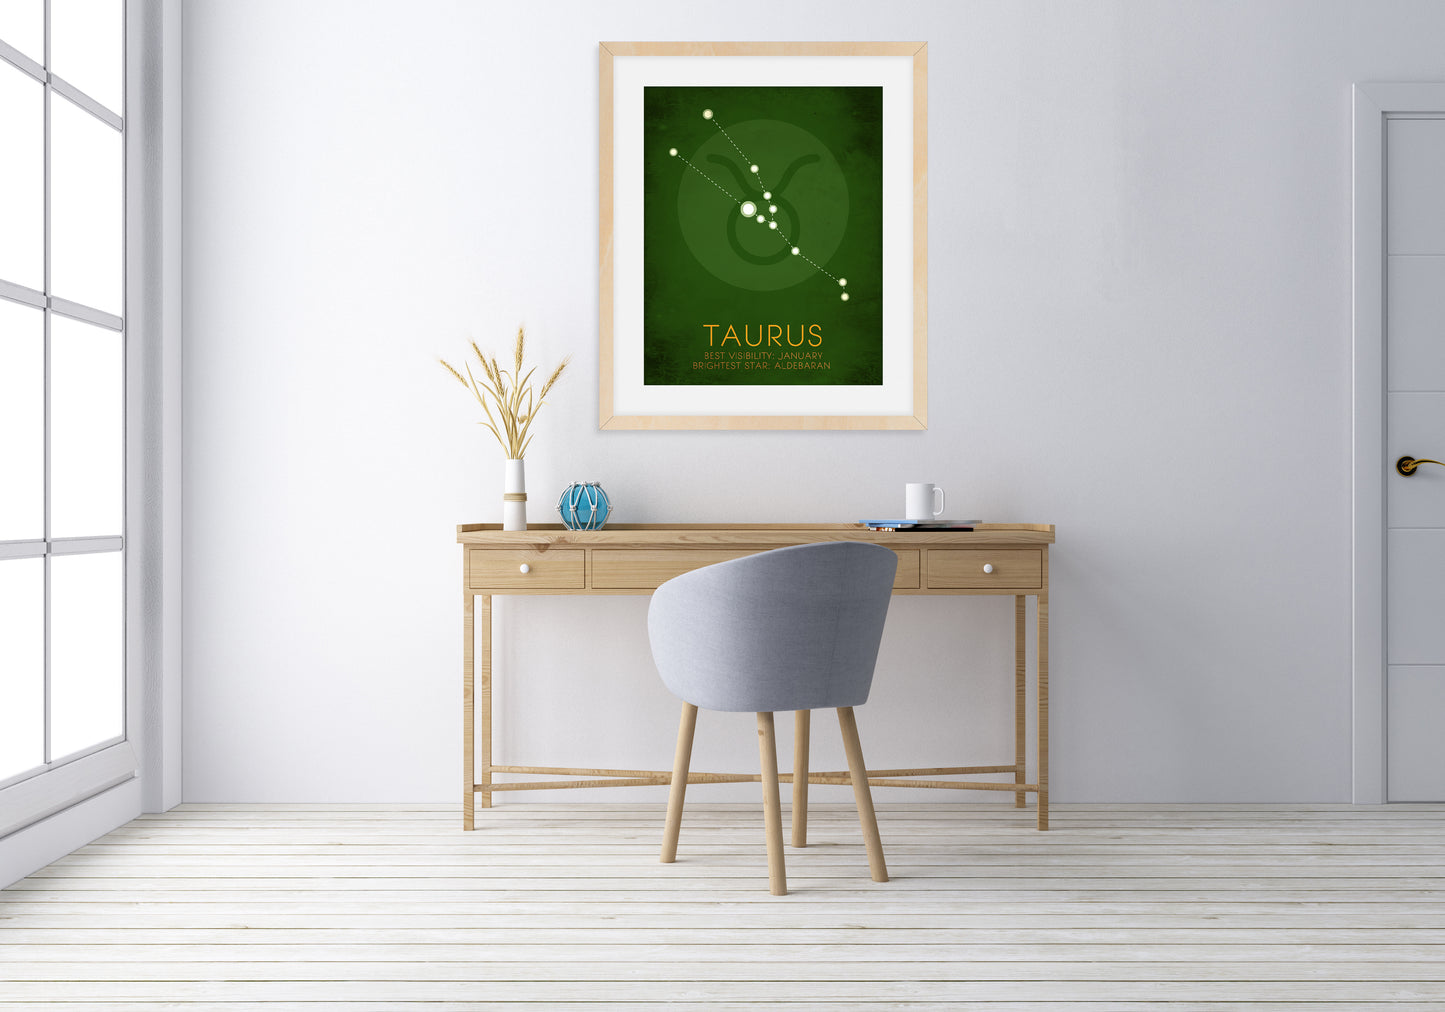 Taurus Zodiac Star Constellation Art Print